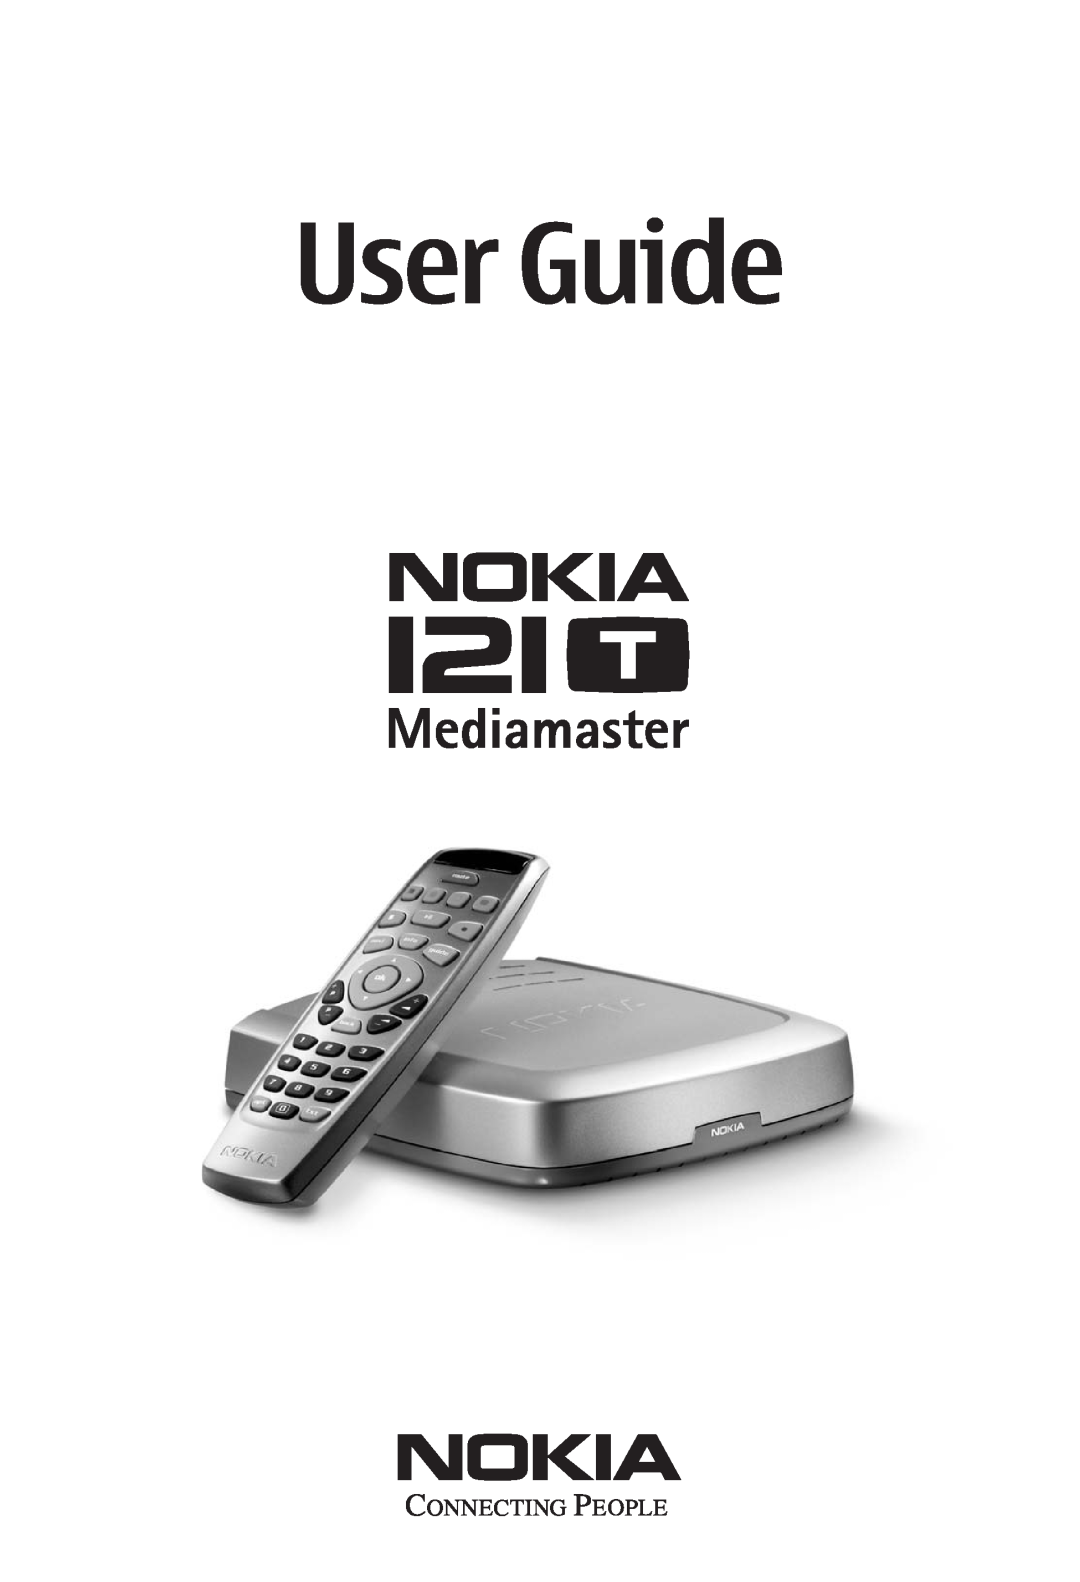 Nokia 121 T manual User Guide 